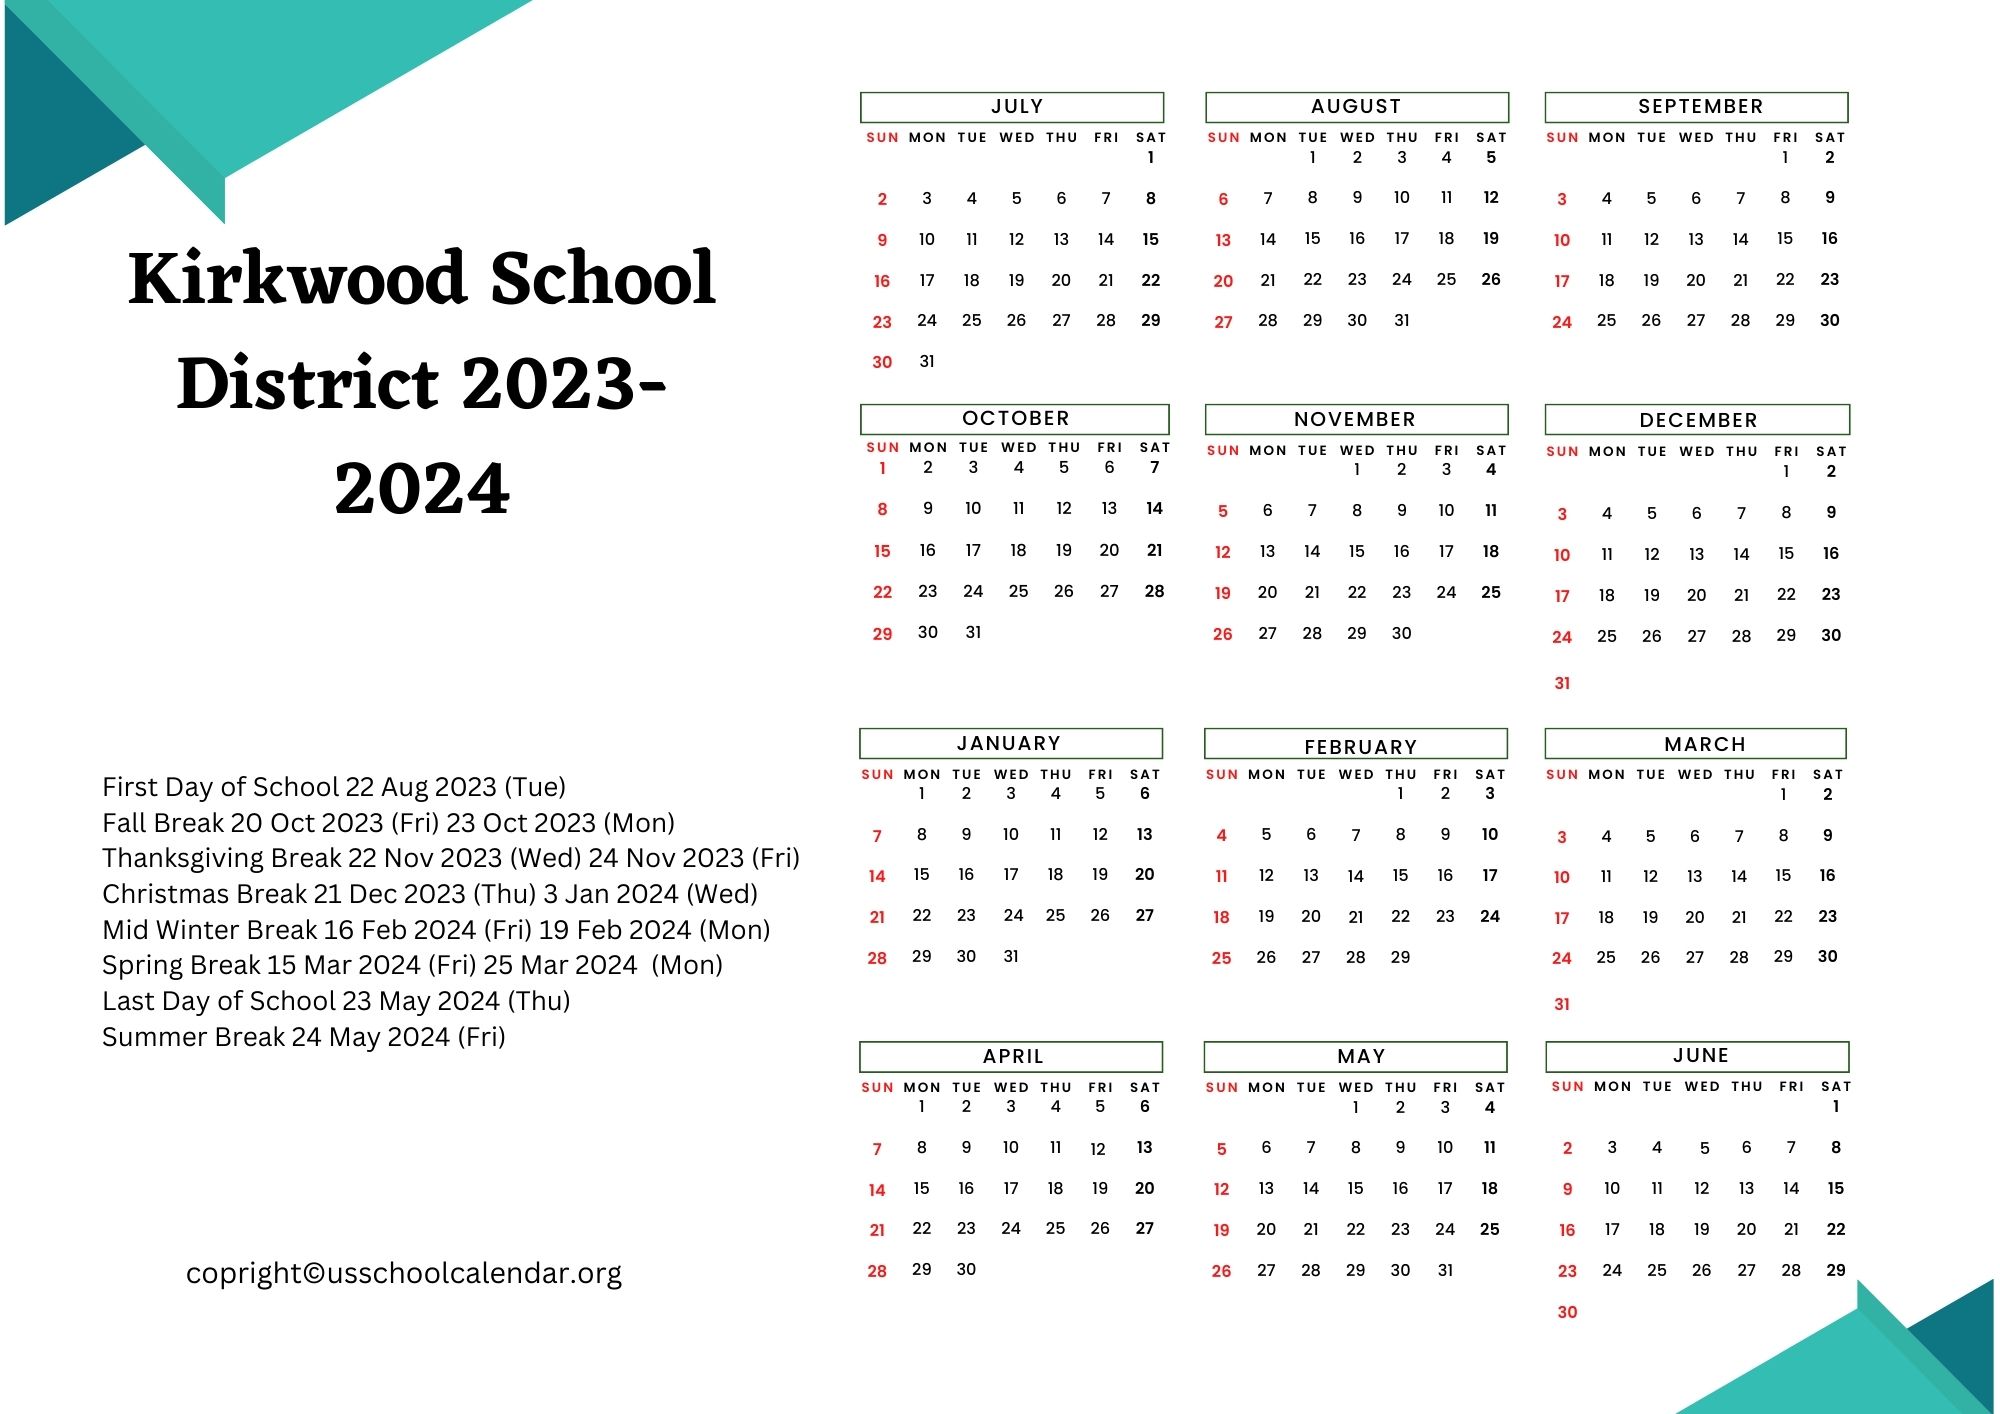 Kirkwood School District Calendar with Holidays 20232024